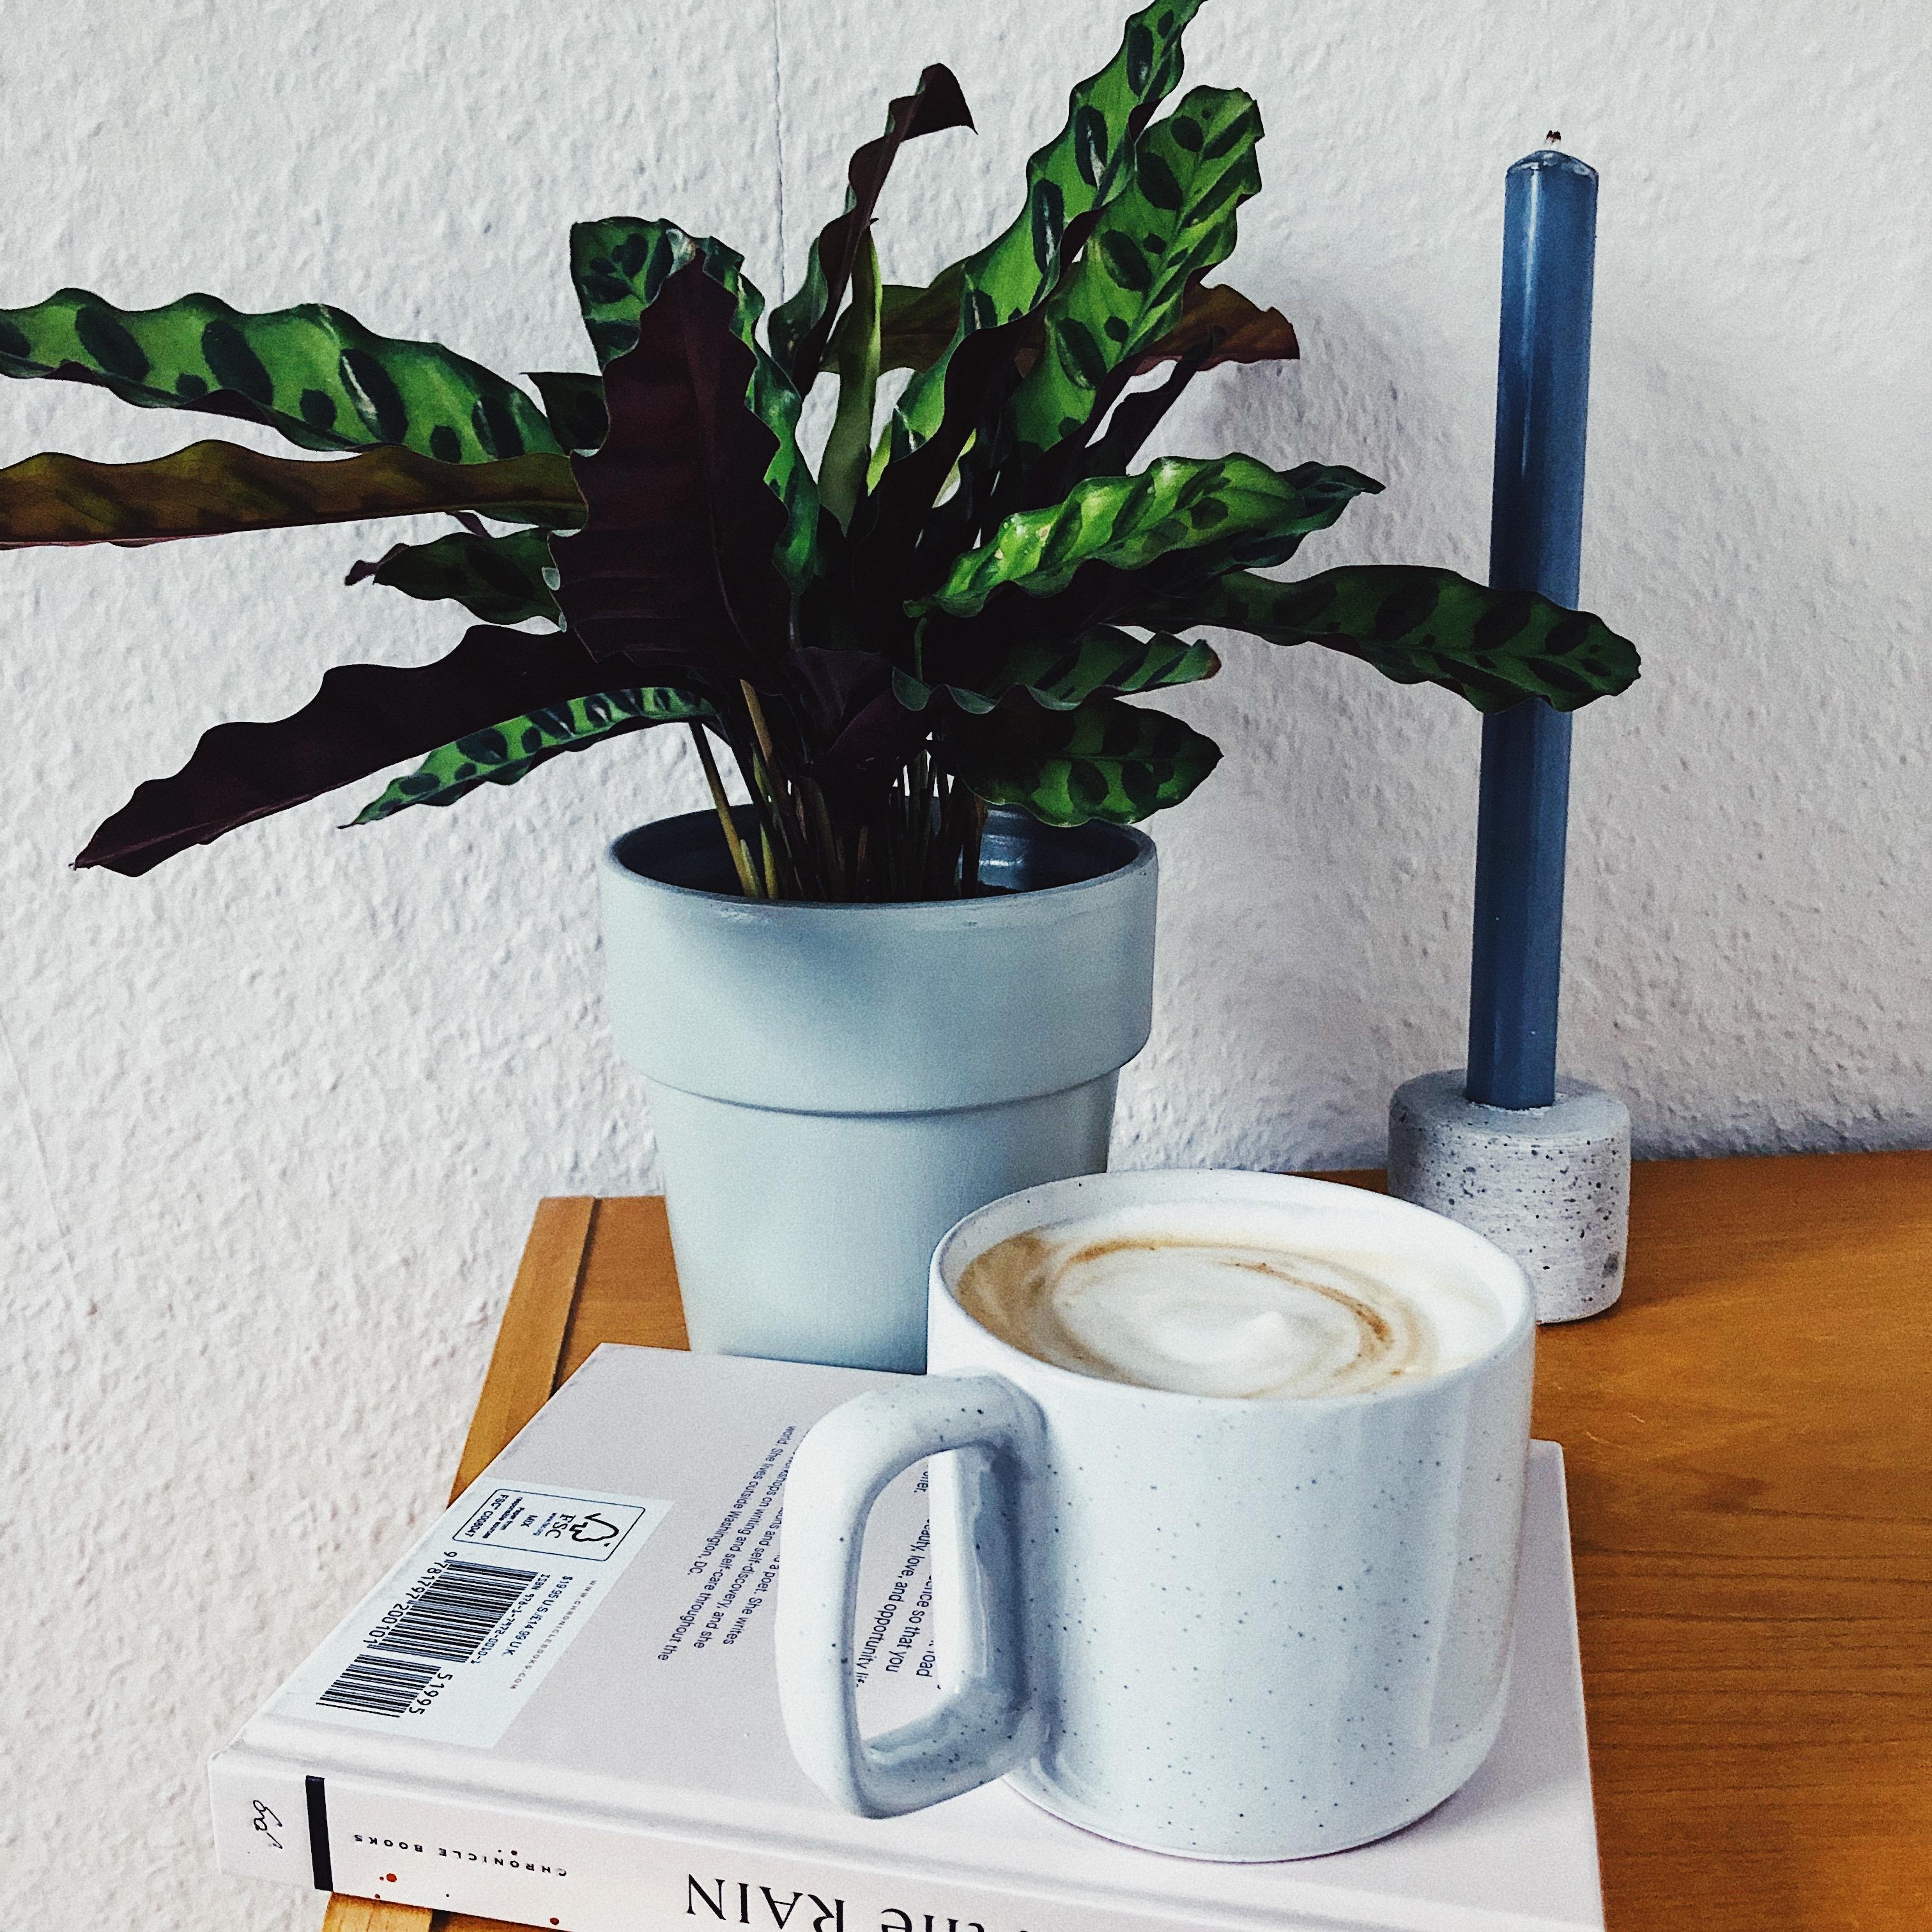 Morgens mit Kaffee im Bett ist doch der beste Zustand!
#Kaffee #Kaffeeliebe #Morningvibes #Pflanzen #Kerze